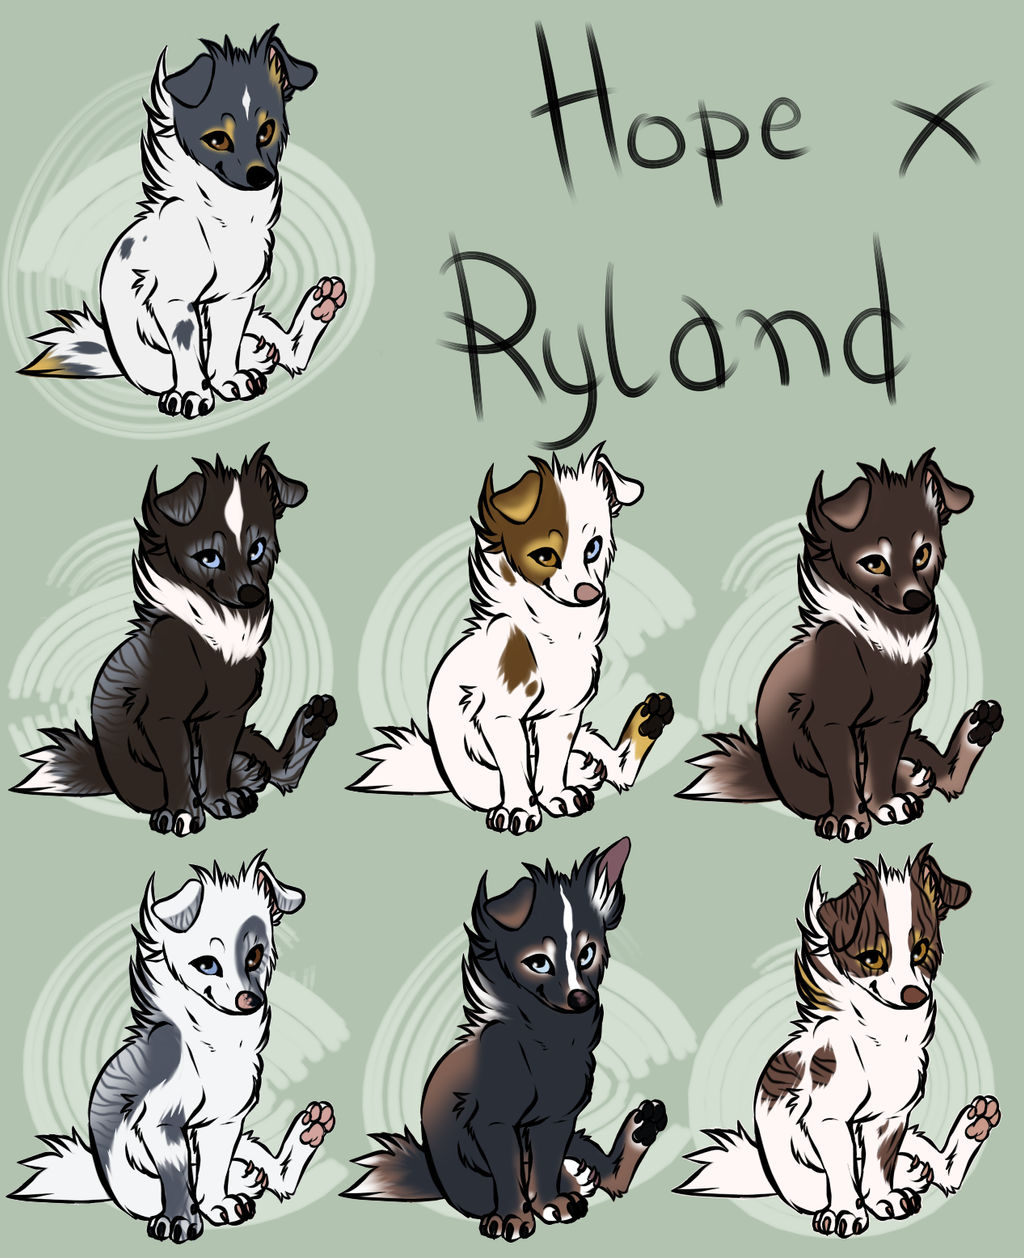 Ryland x Hope litter [CLOSED]